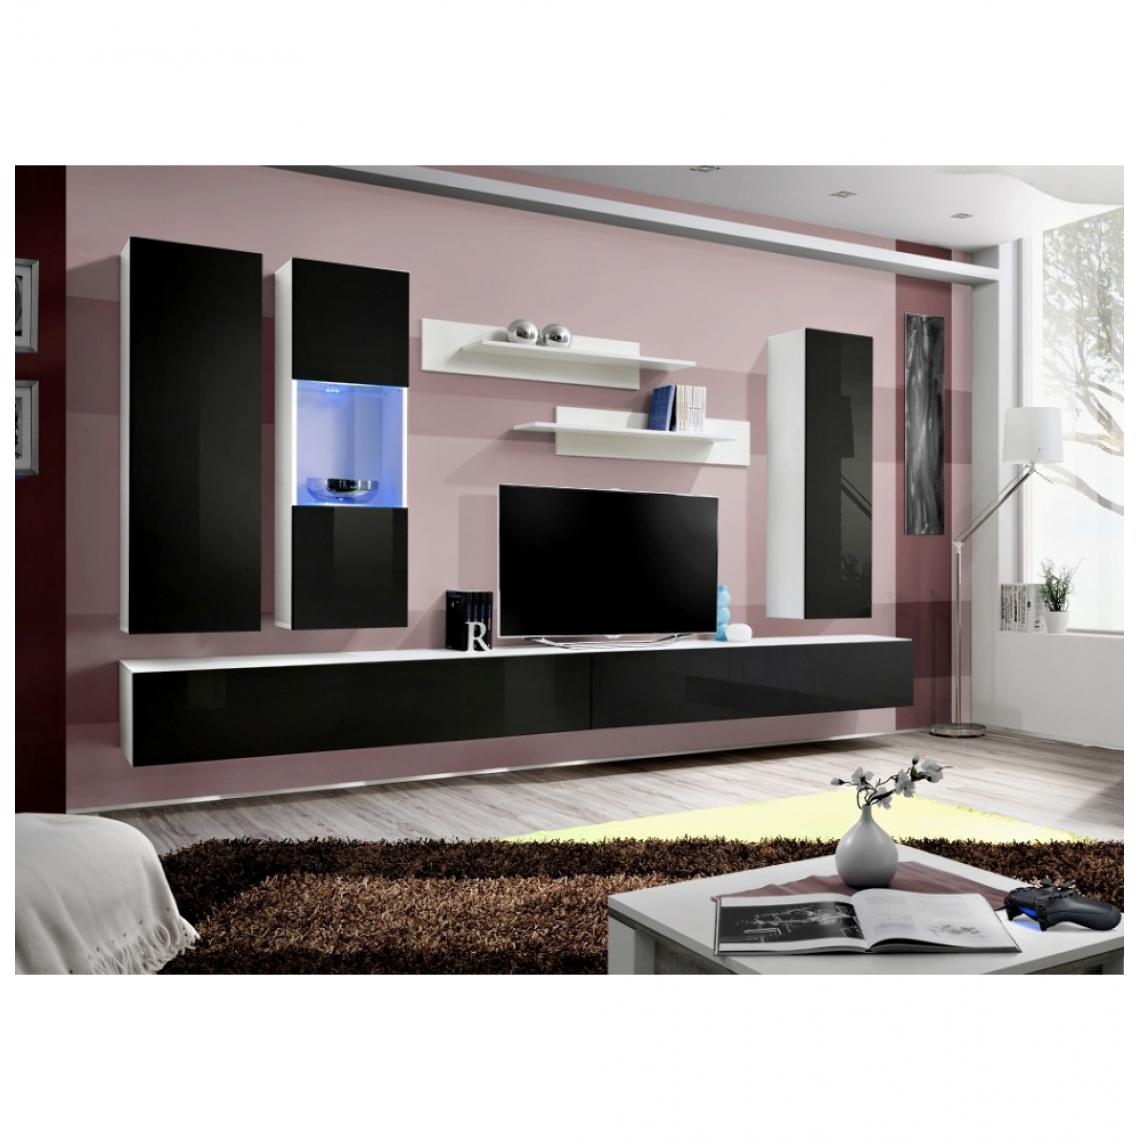 Ac-Deco - Ensemble meuble TV mural - Fly III - 320 cm x 190 cm x 40 cm - Blanc et noir - Meubles TV, Hi-Fi